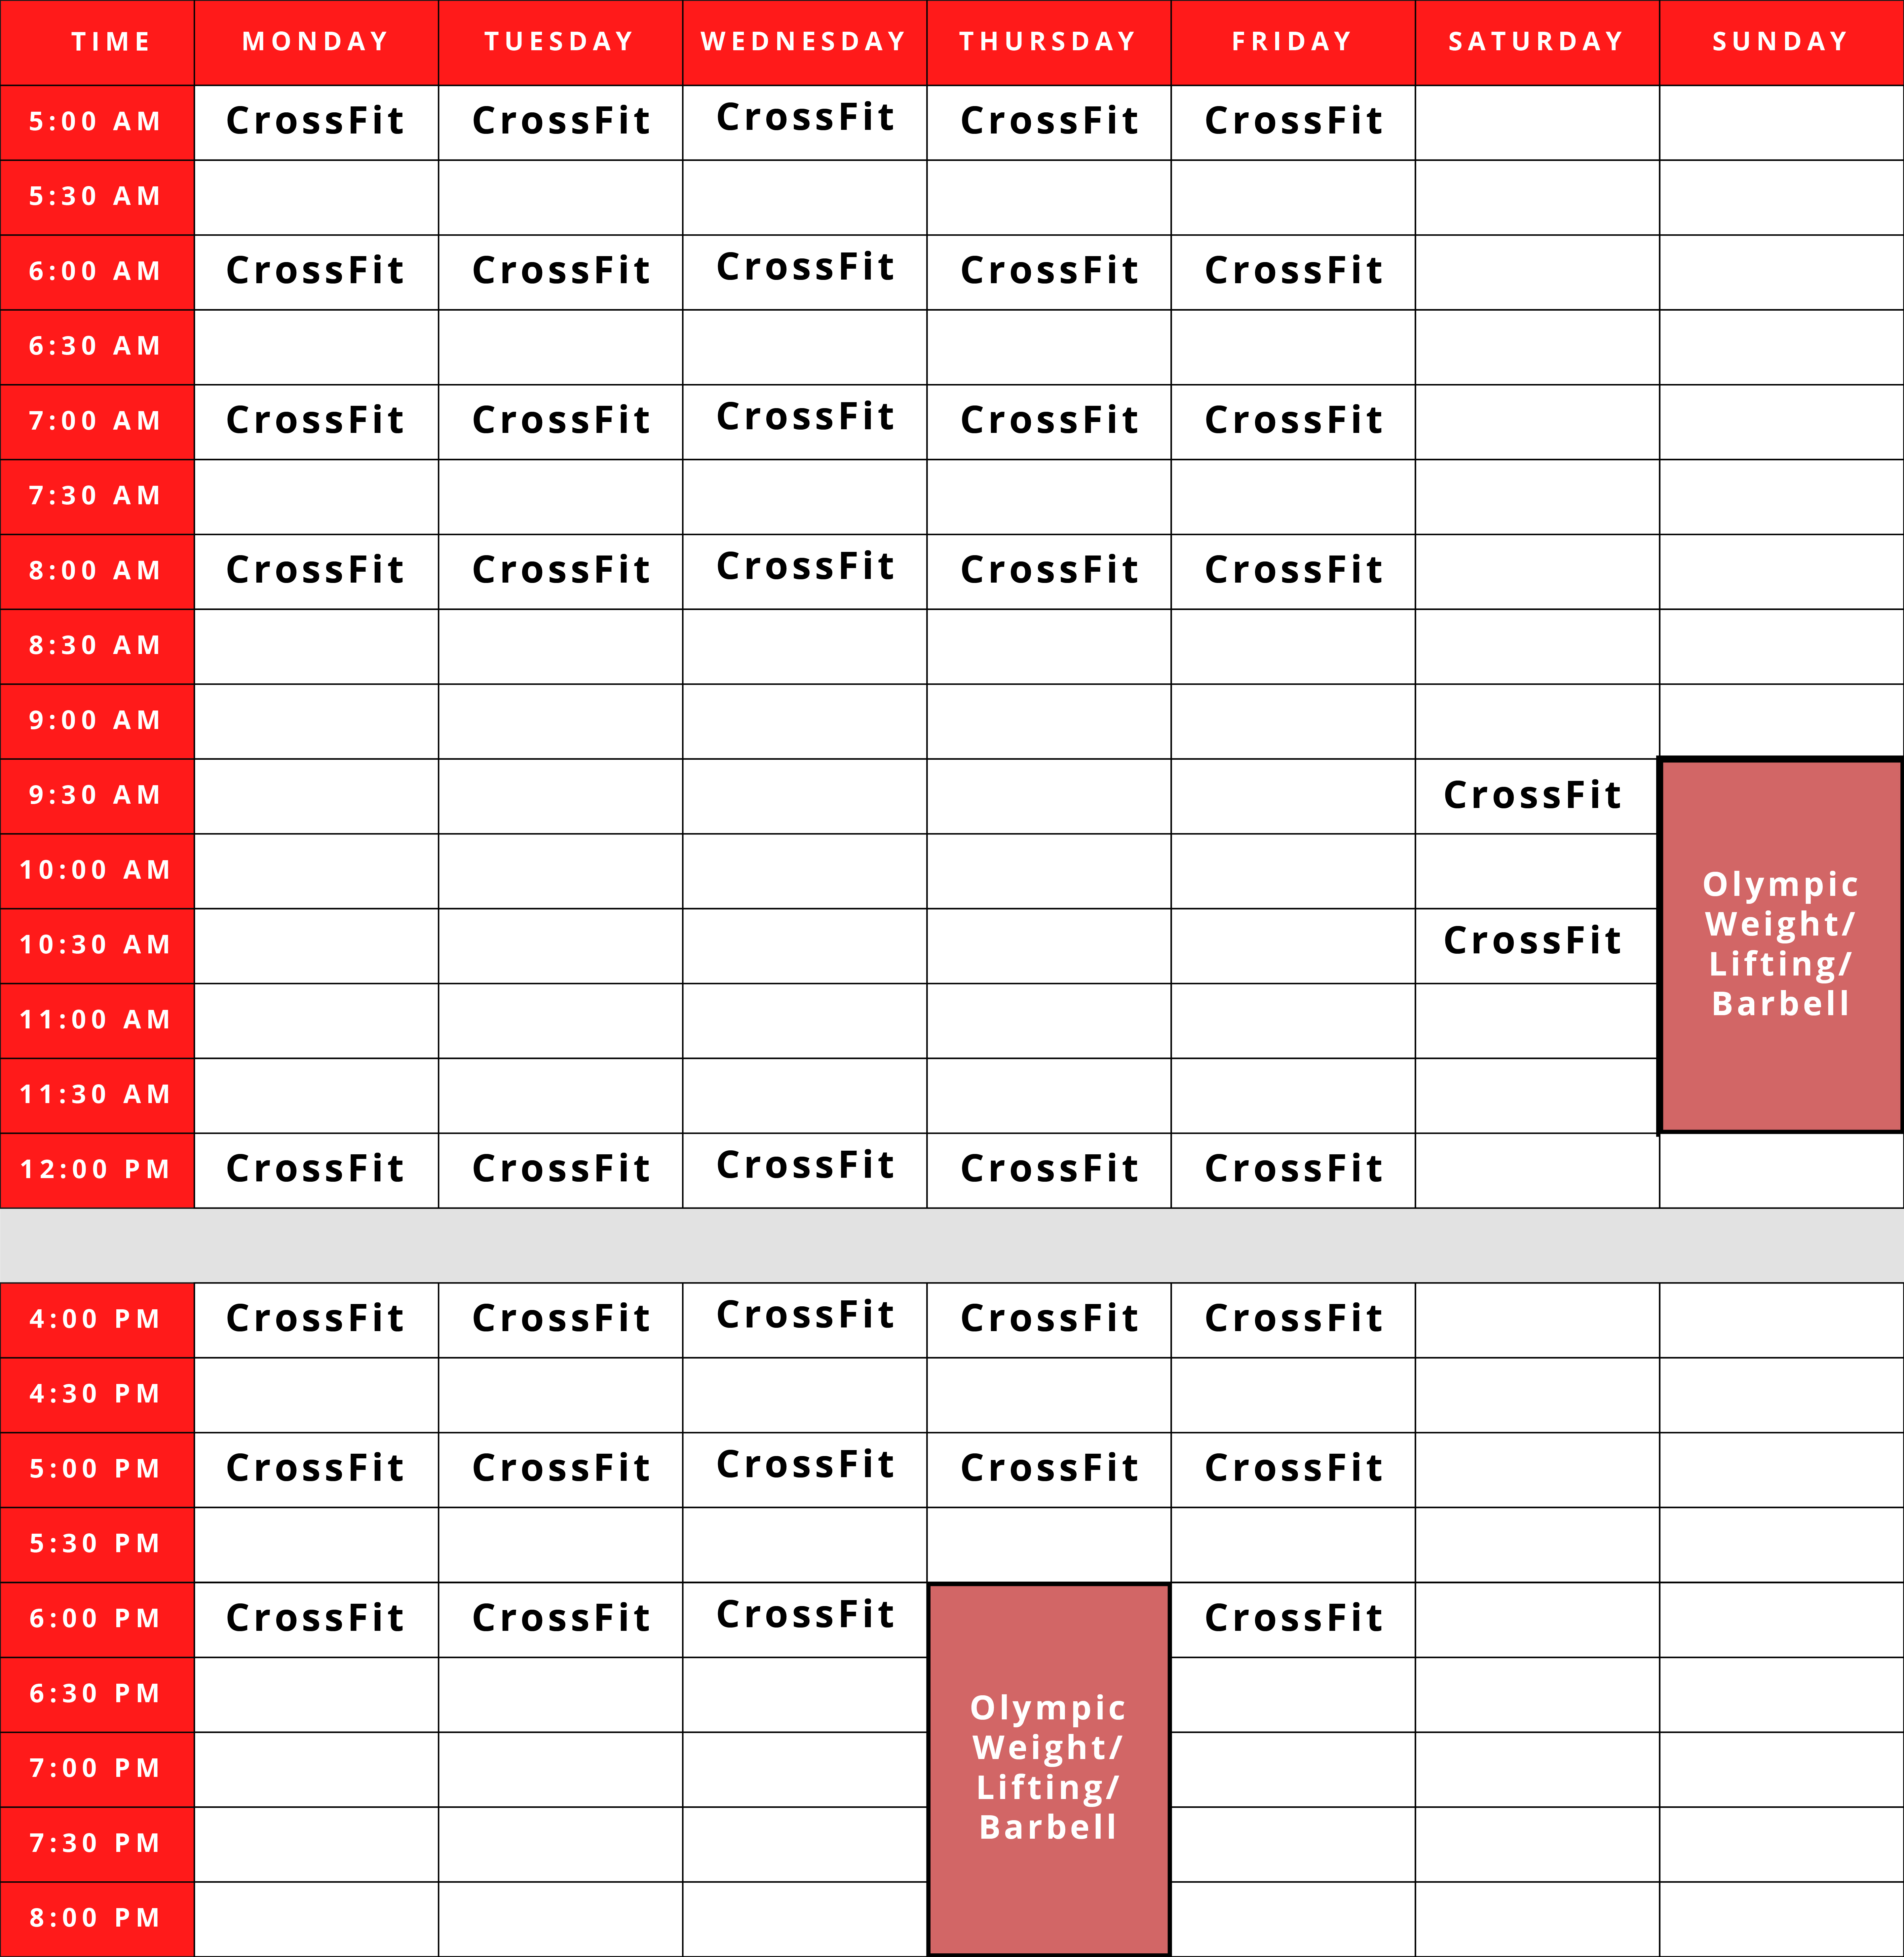 Crossfit ATR Schedule